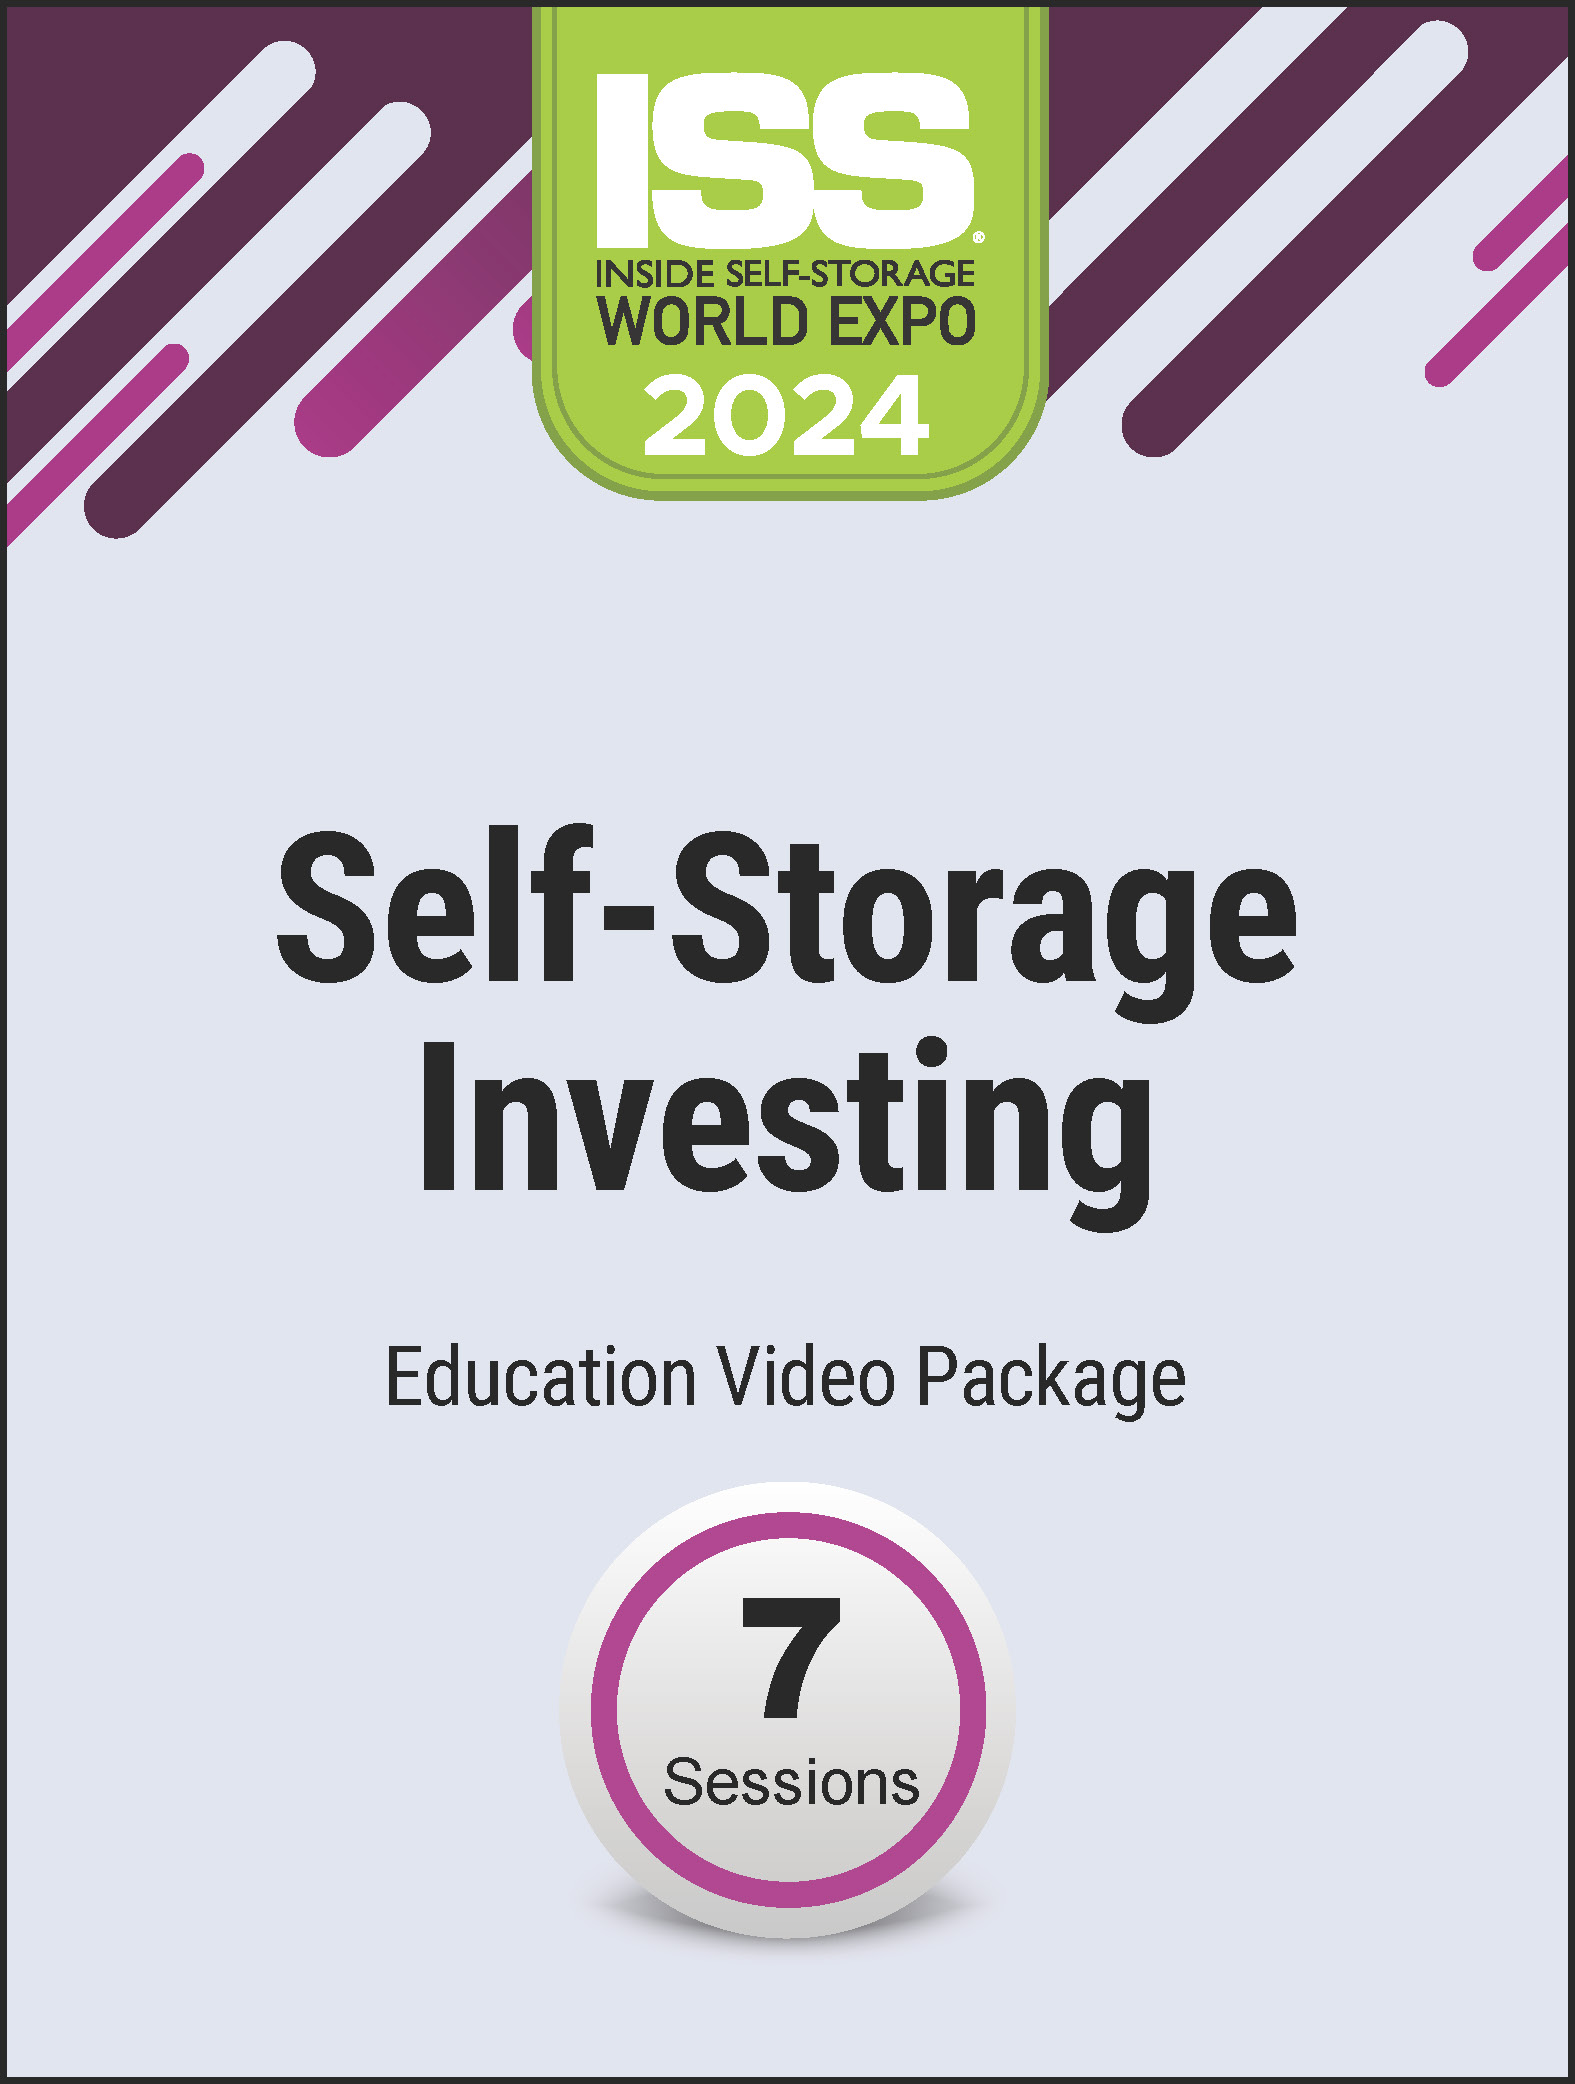 Video Pre-Order PDF - Self-Storage Investing 2024 Education Video Package